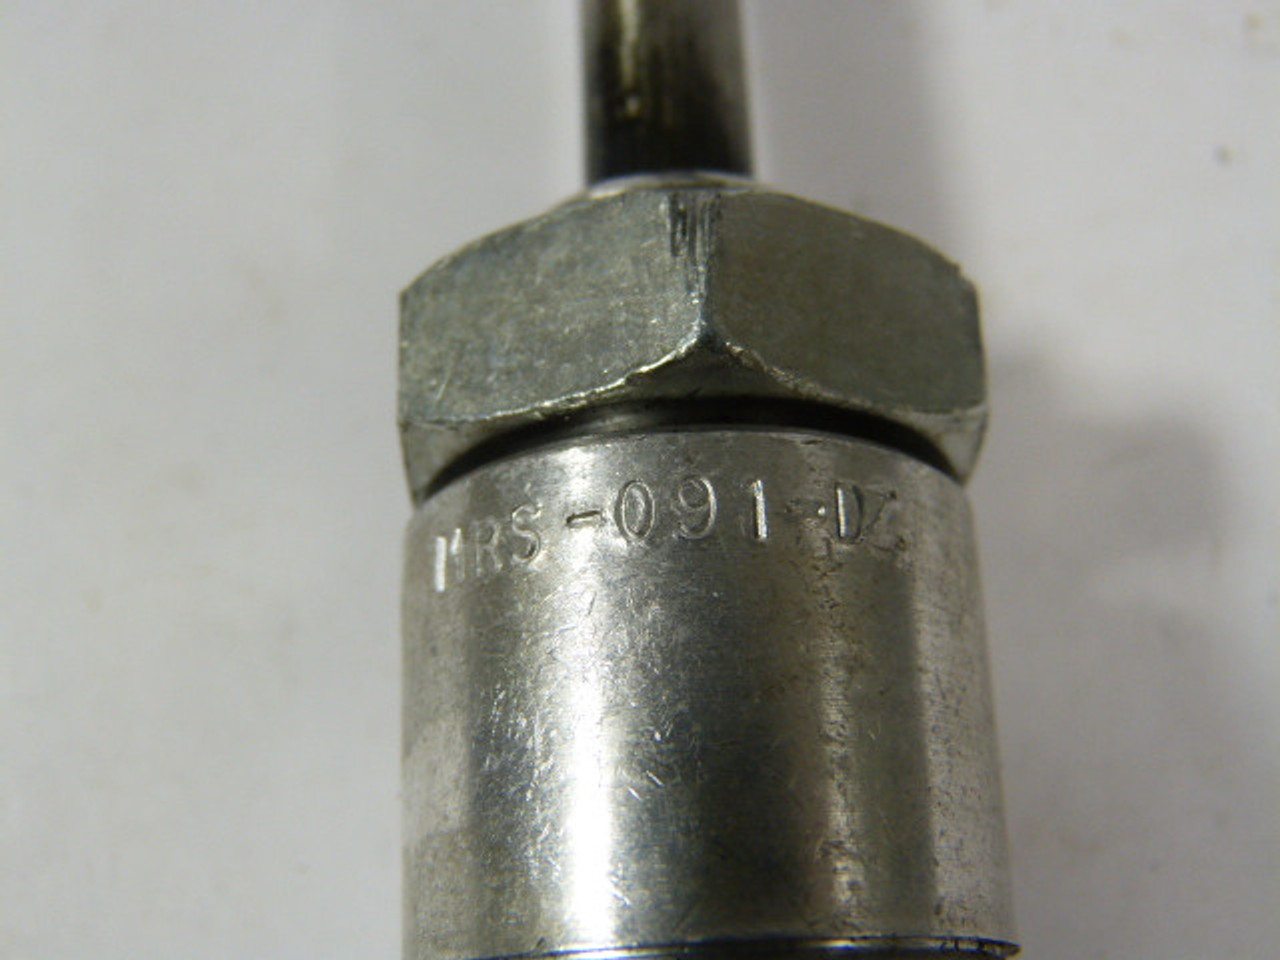 Bimba MRS-091-DZ Pneumatic Cylinder 1 1/16" Bore 1" Stroke USED